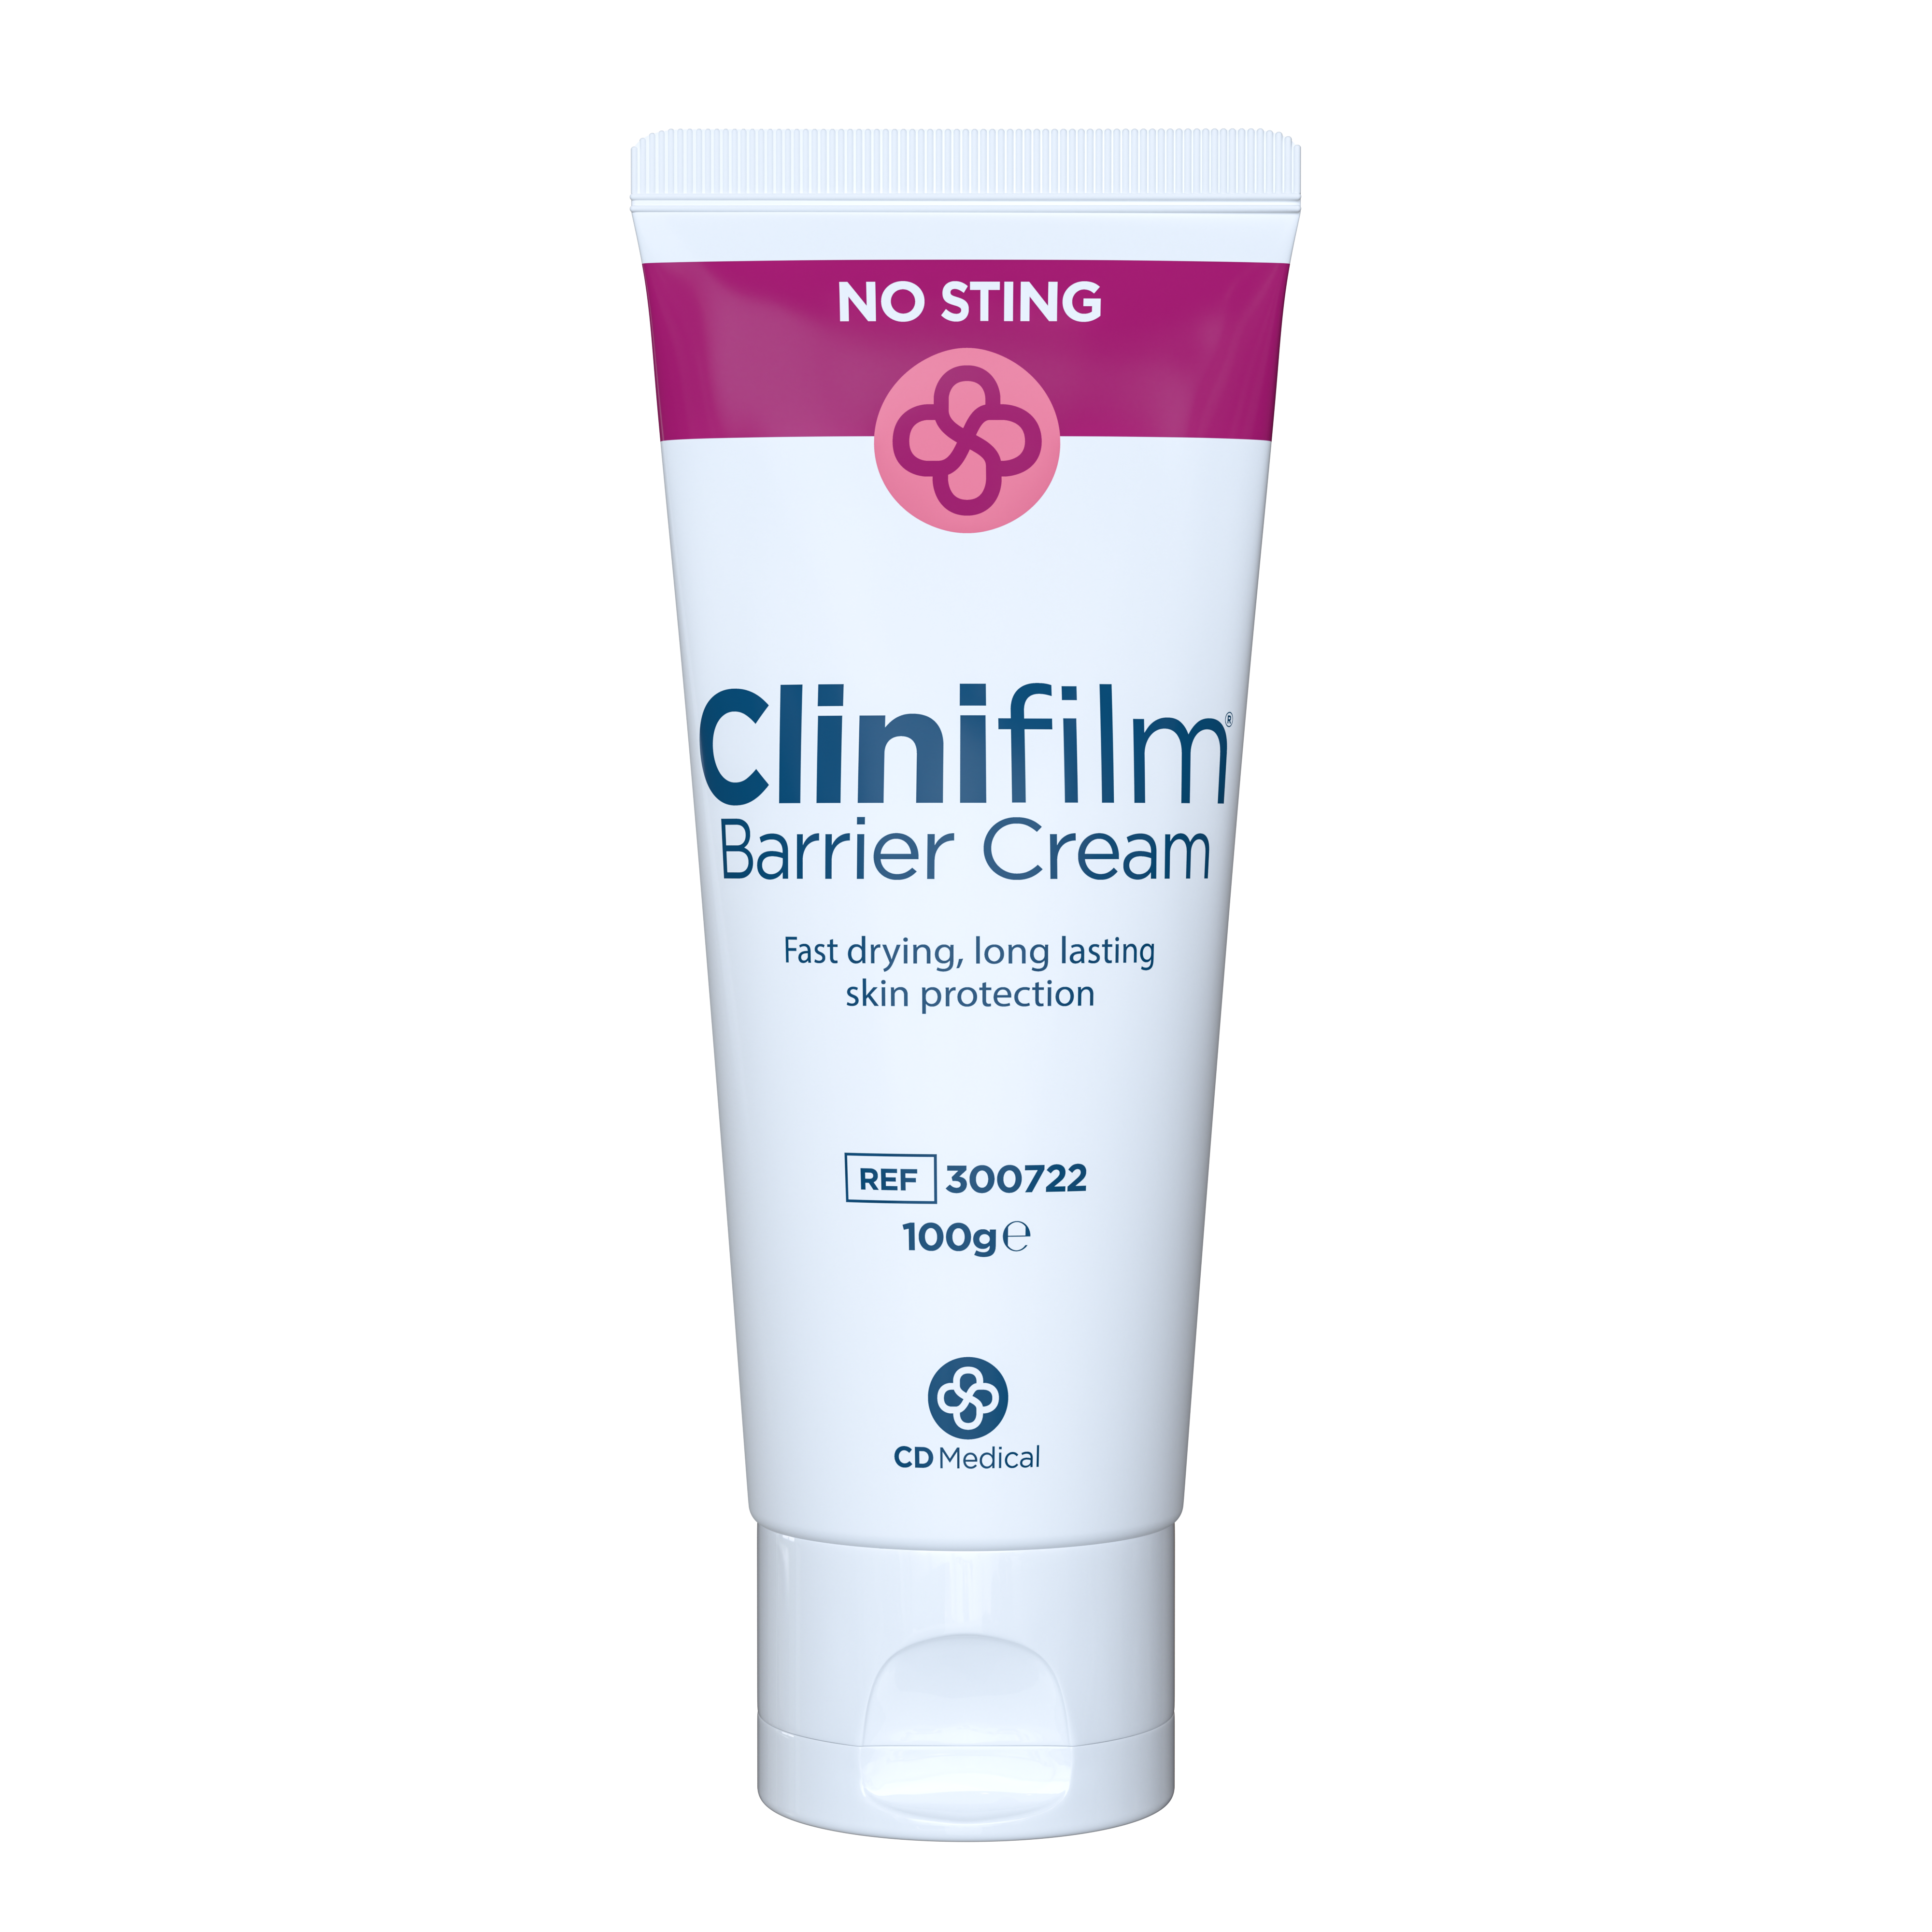 Clinifilm Barrier Cream